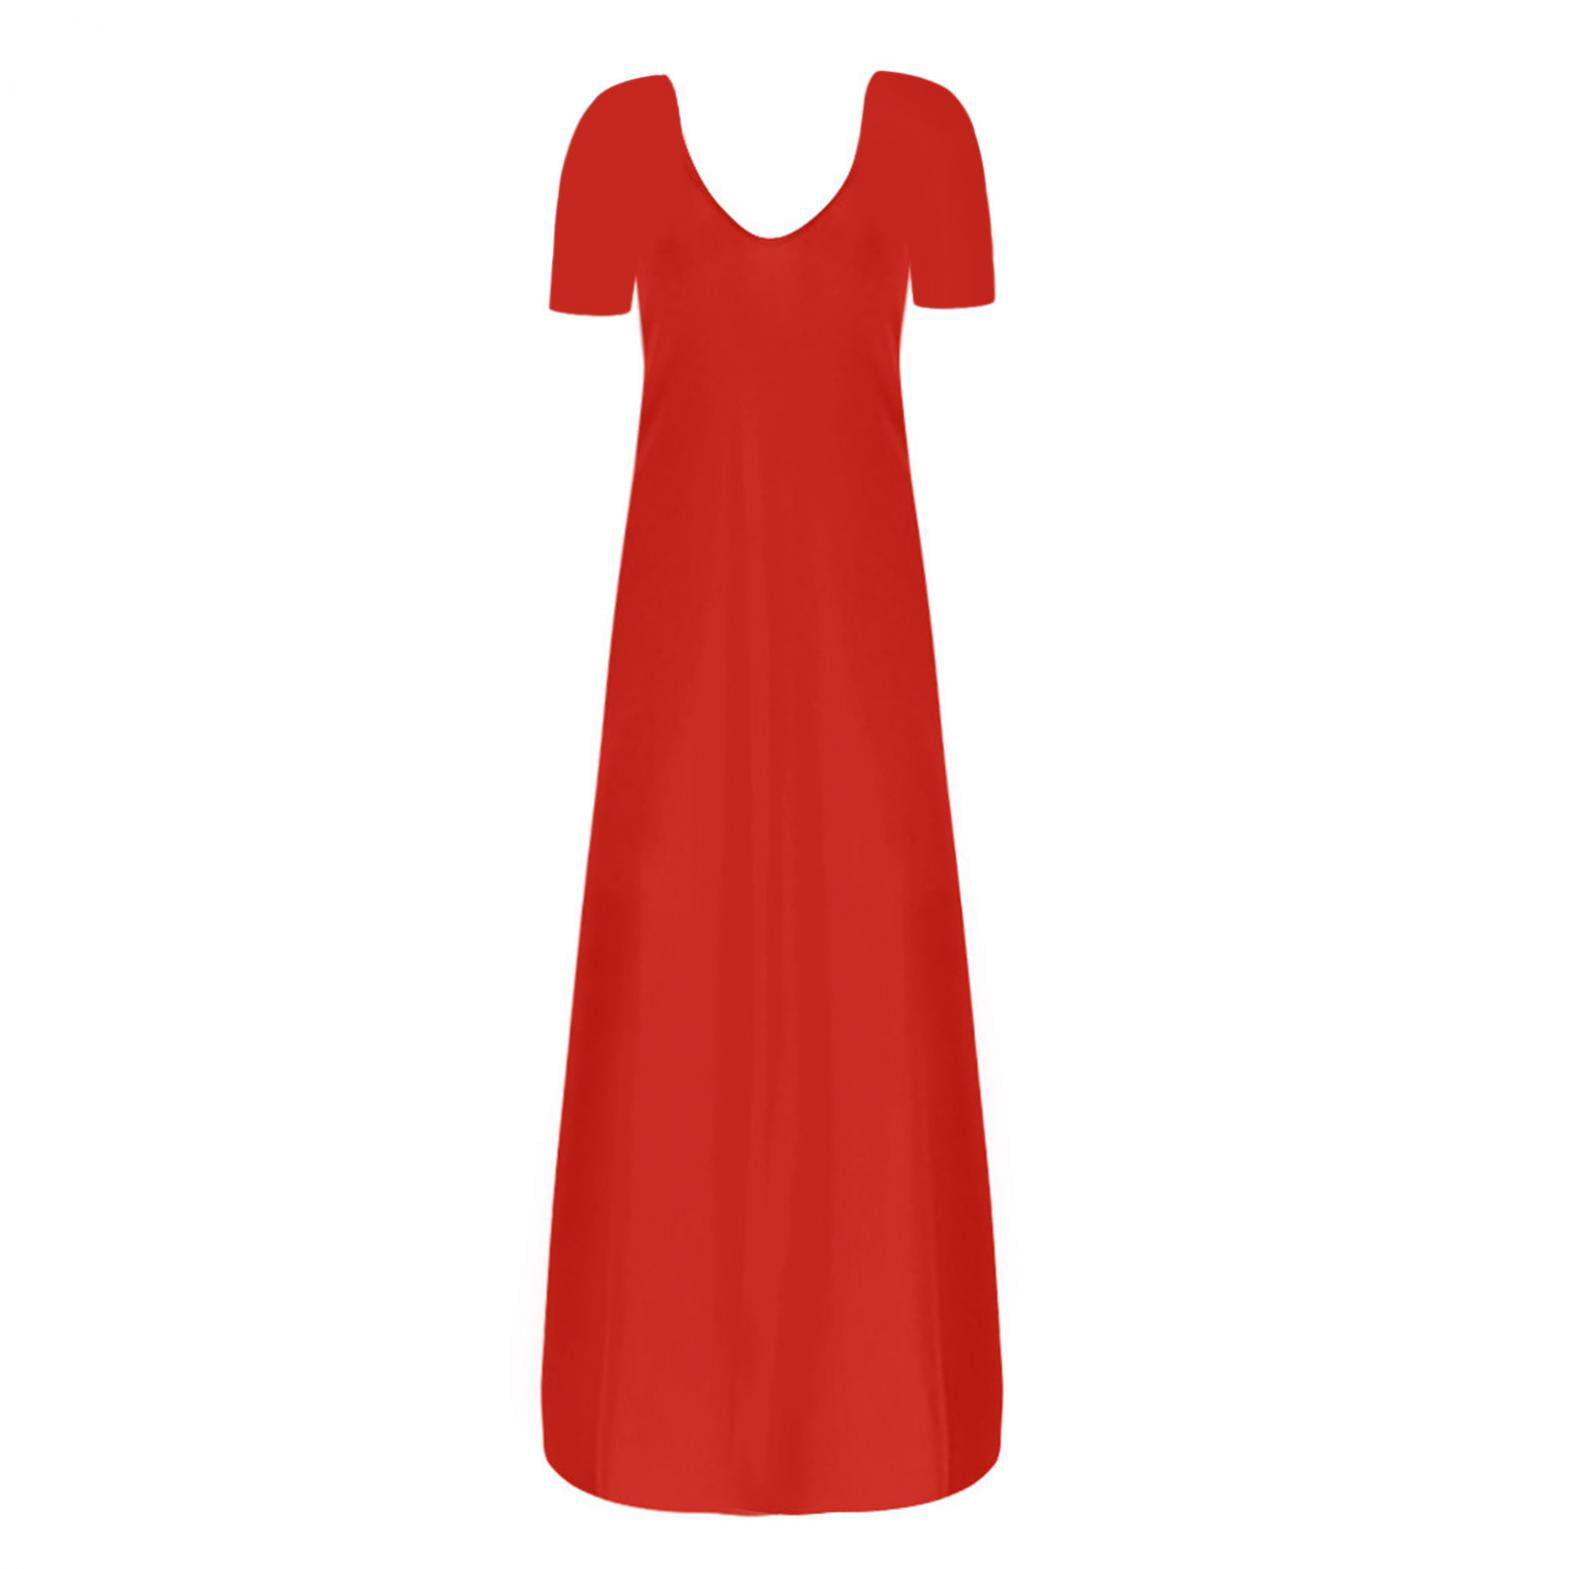 Lenago Women's Plus Size Deep V-Neck Standard-Fit Short Sleeve Solid Maxi Party Dress - image 5 of 6